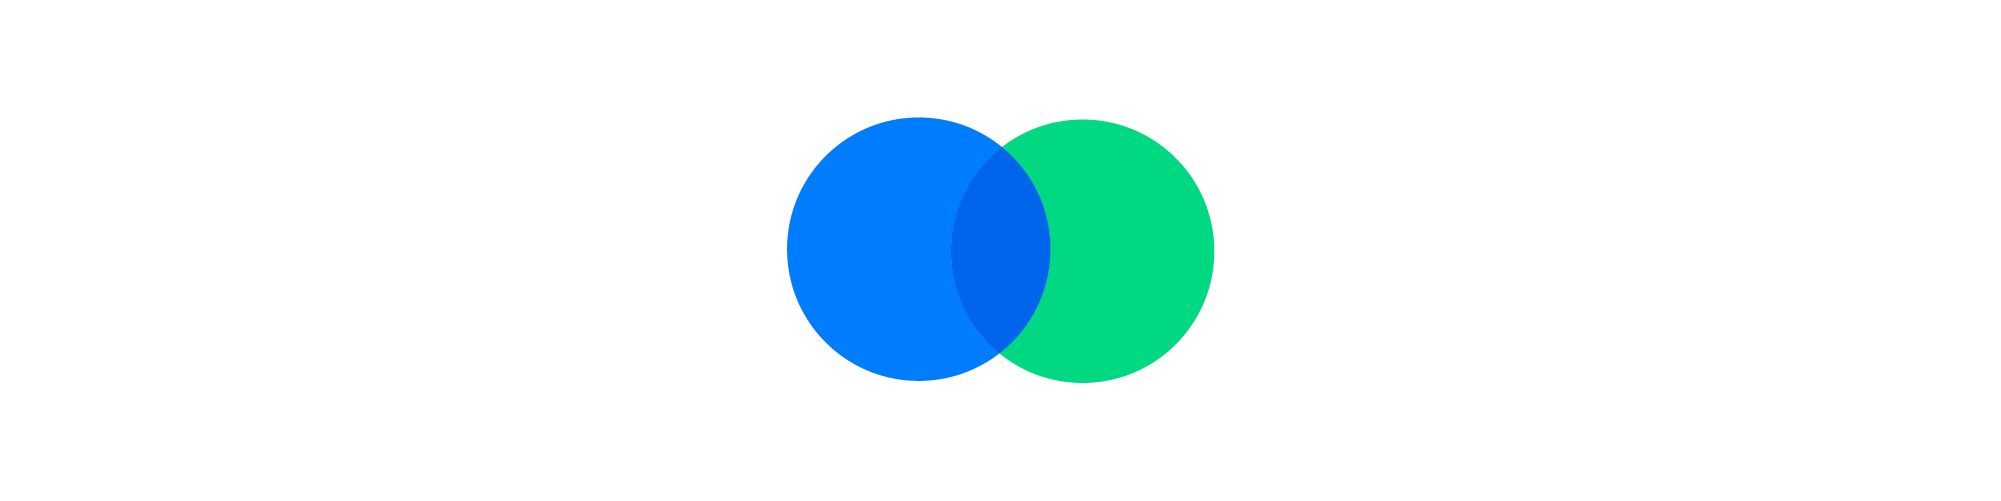 Illustrated icon of a Venn diagram